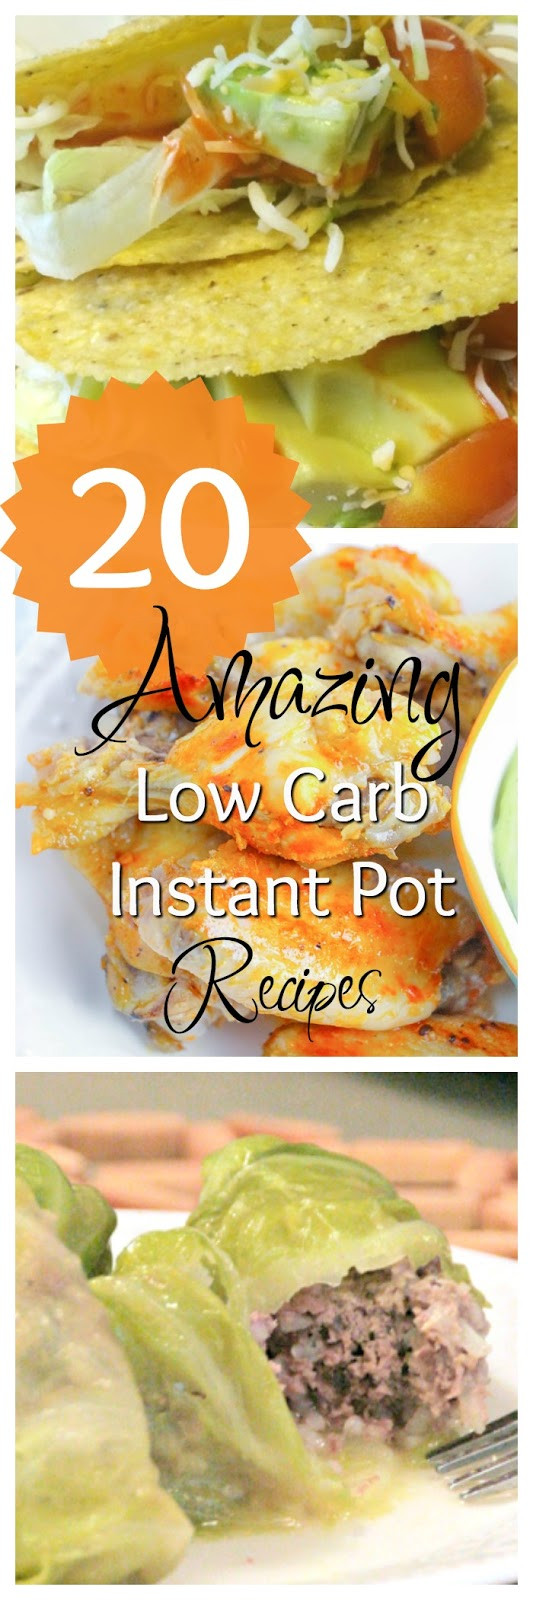 Diabetic Instant Pot Recipes
 20 of the Most AMAZING Low Carb Instant Pot Recipes We